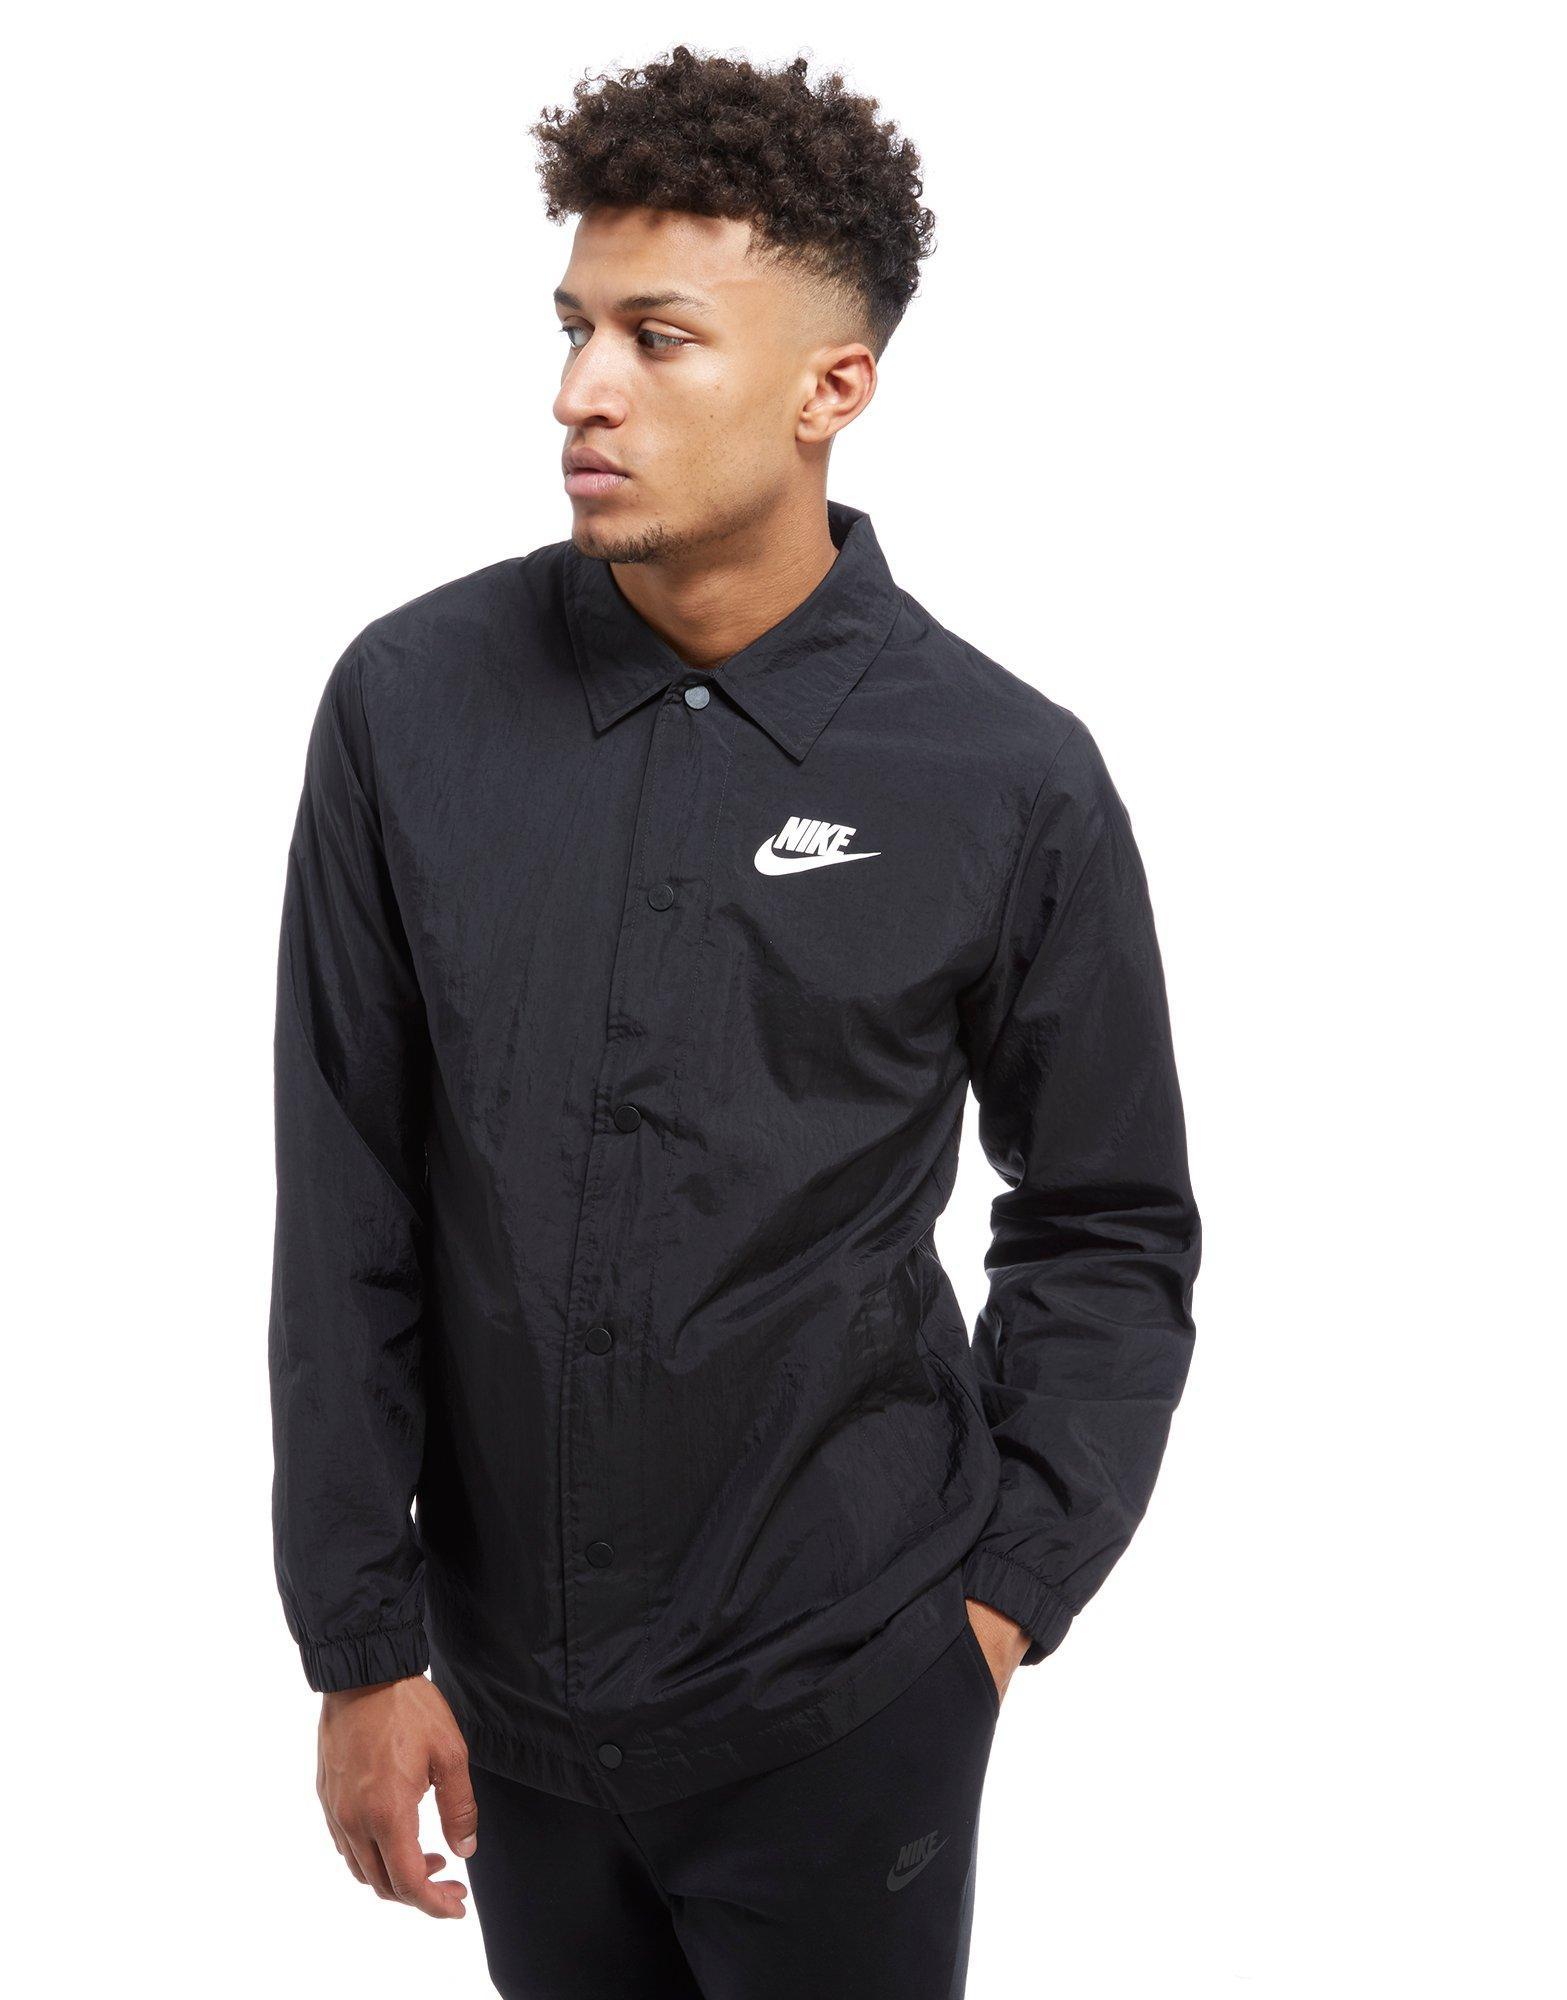 Nike Hybrid Coach Jacket in Black for Men - Lyst